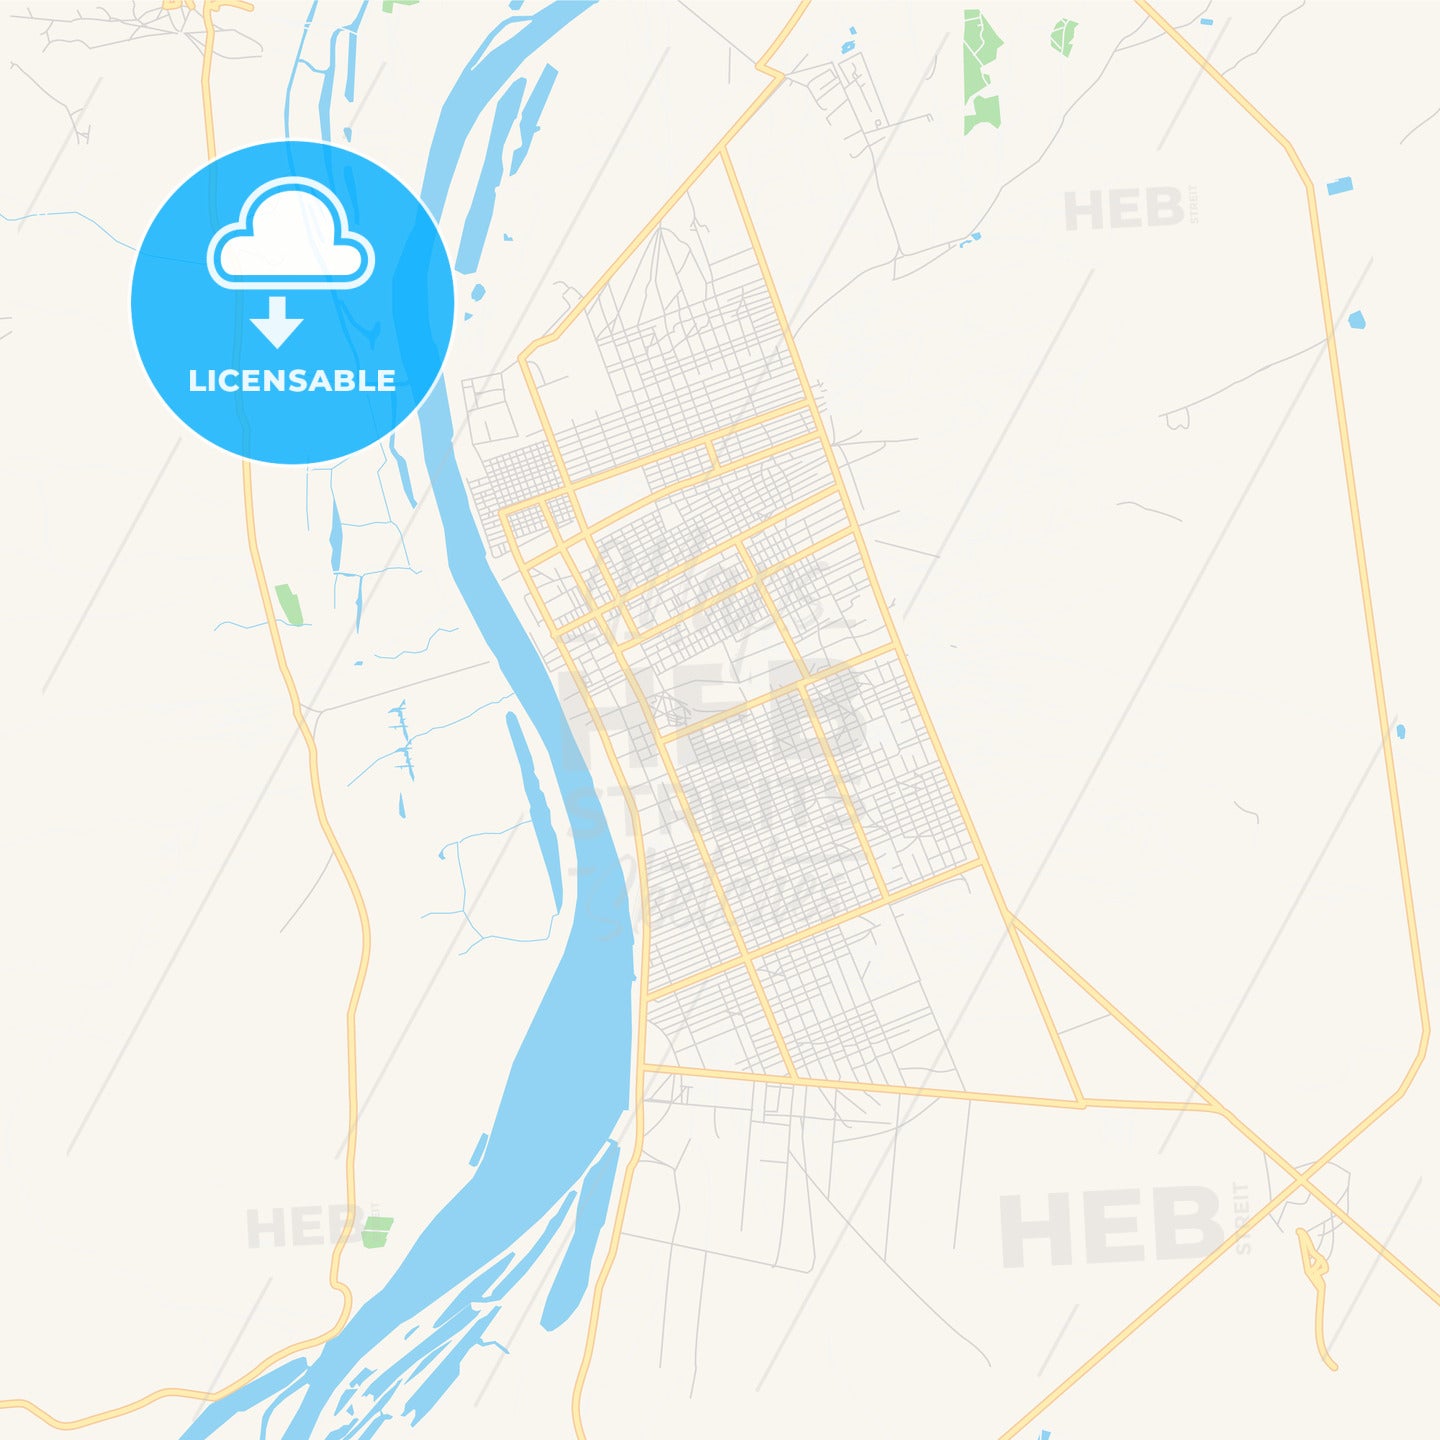 Printable street map of Malakal, South Sudan